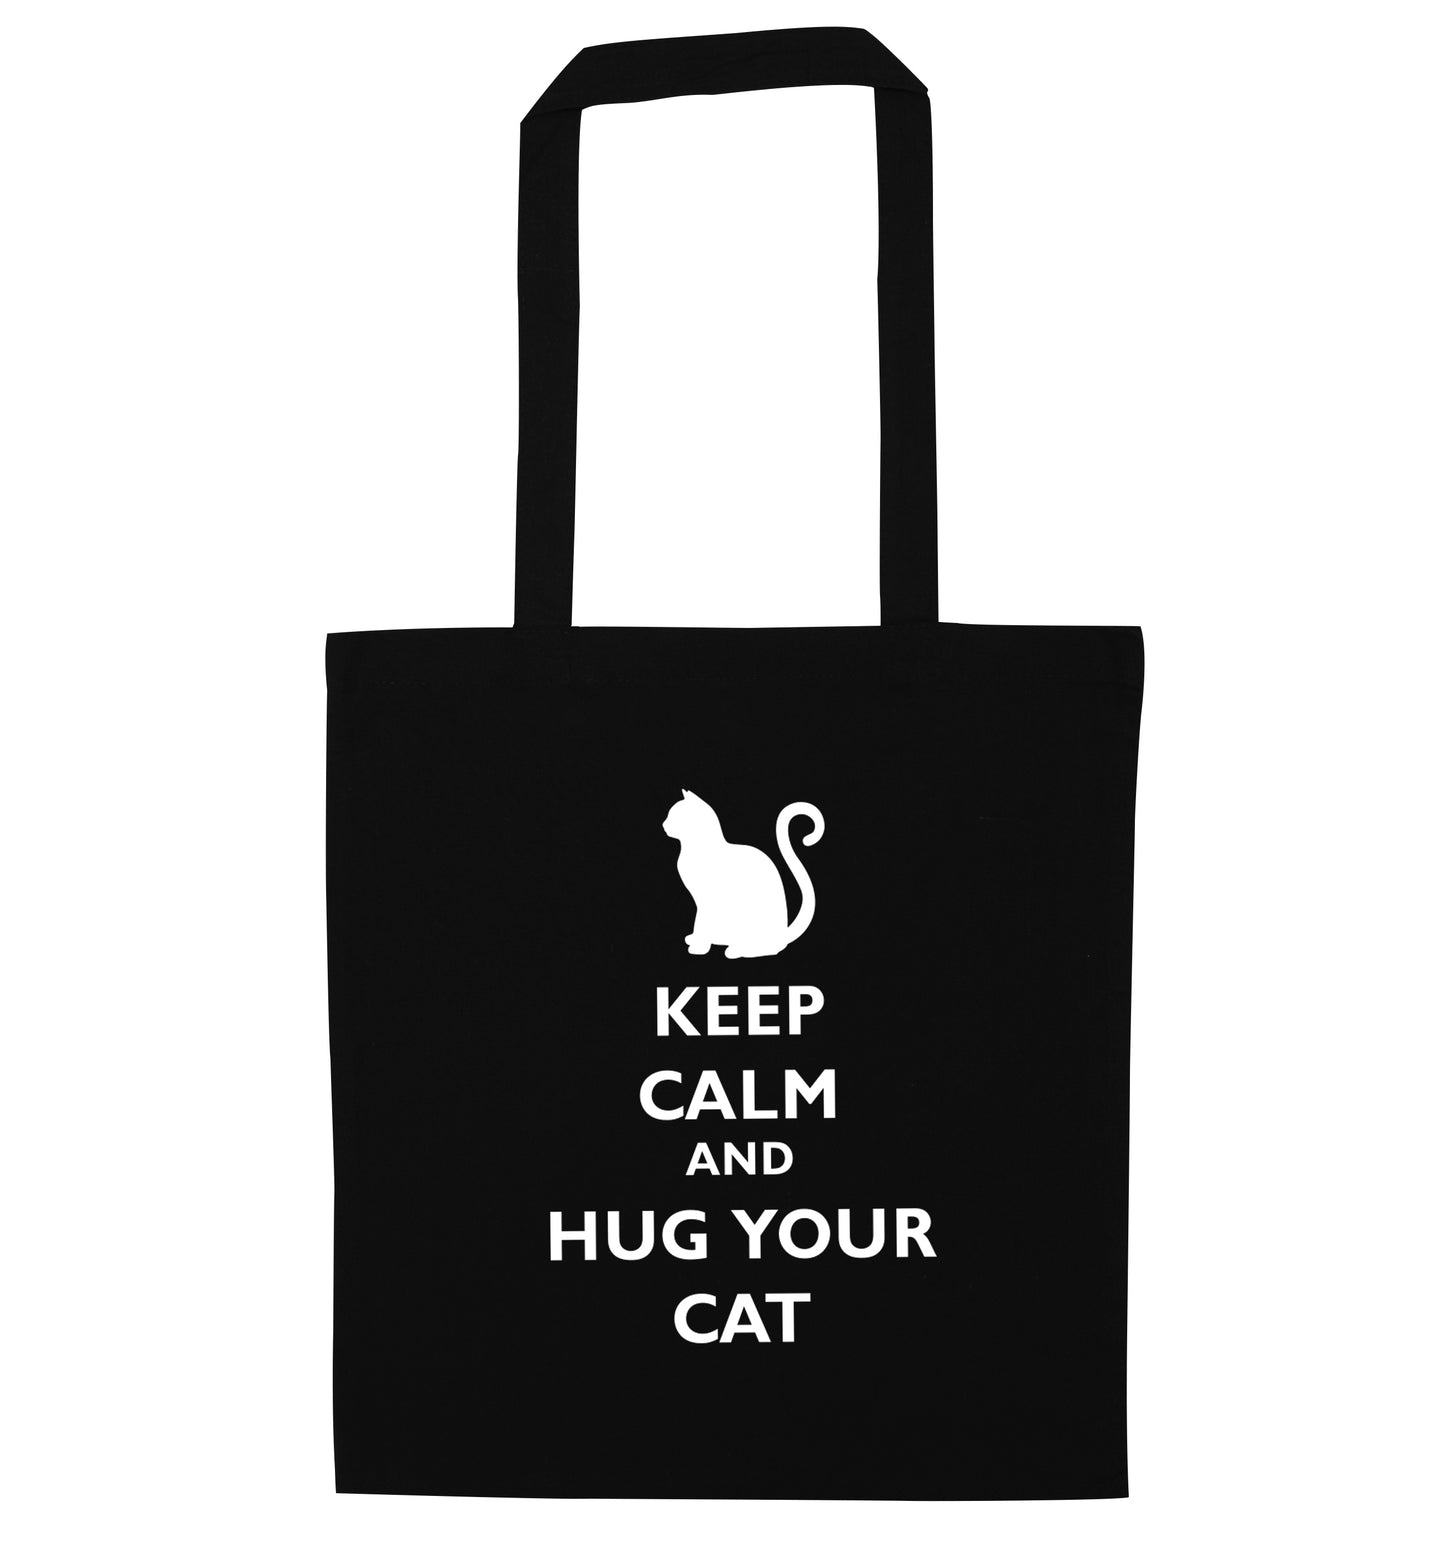 Keep calm and hug your cat black tote bag